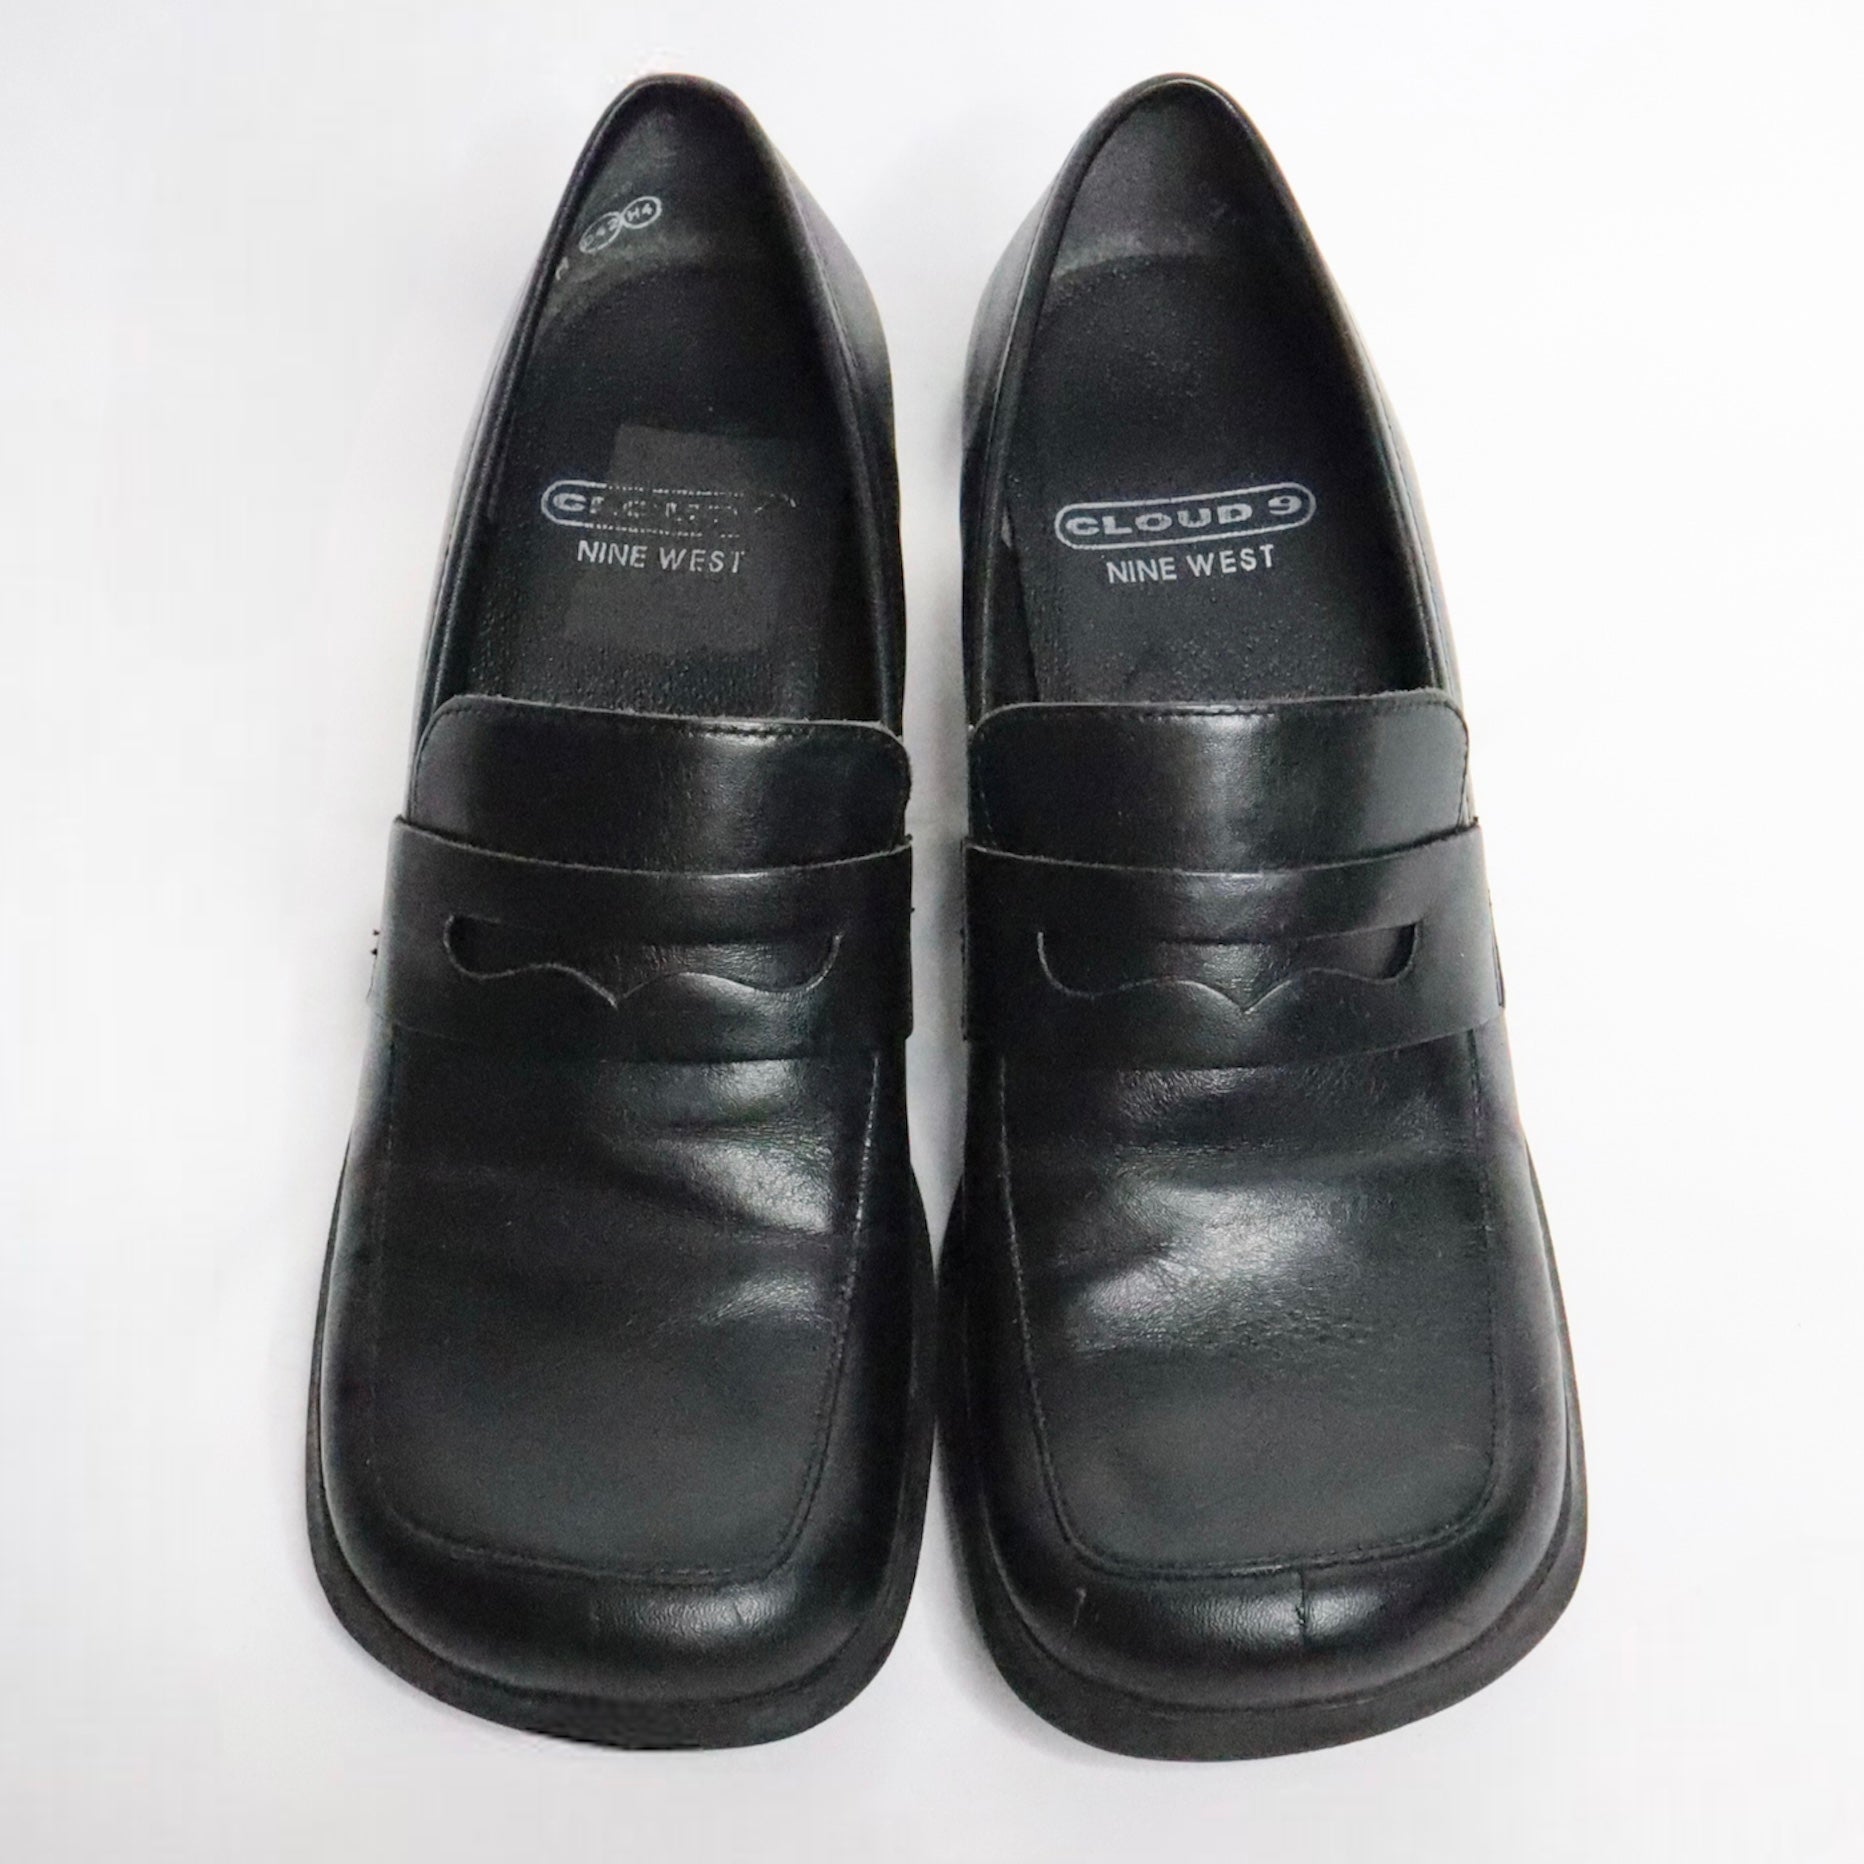 Black Leather Heeled Loafers (7 US)